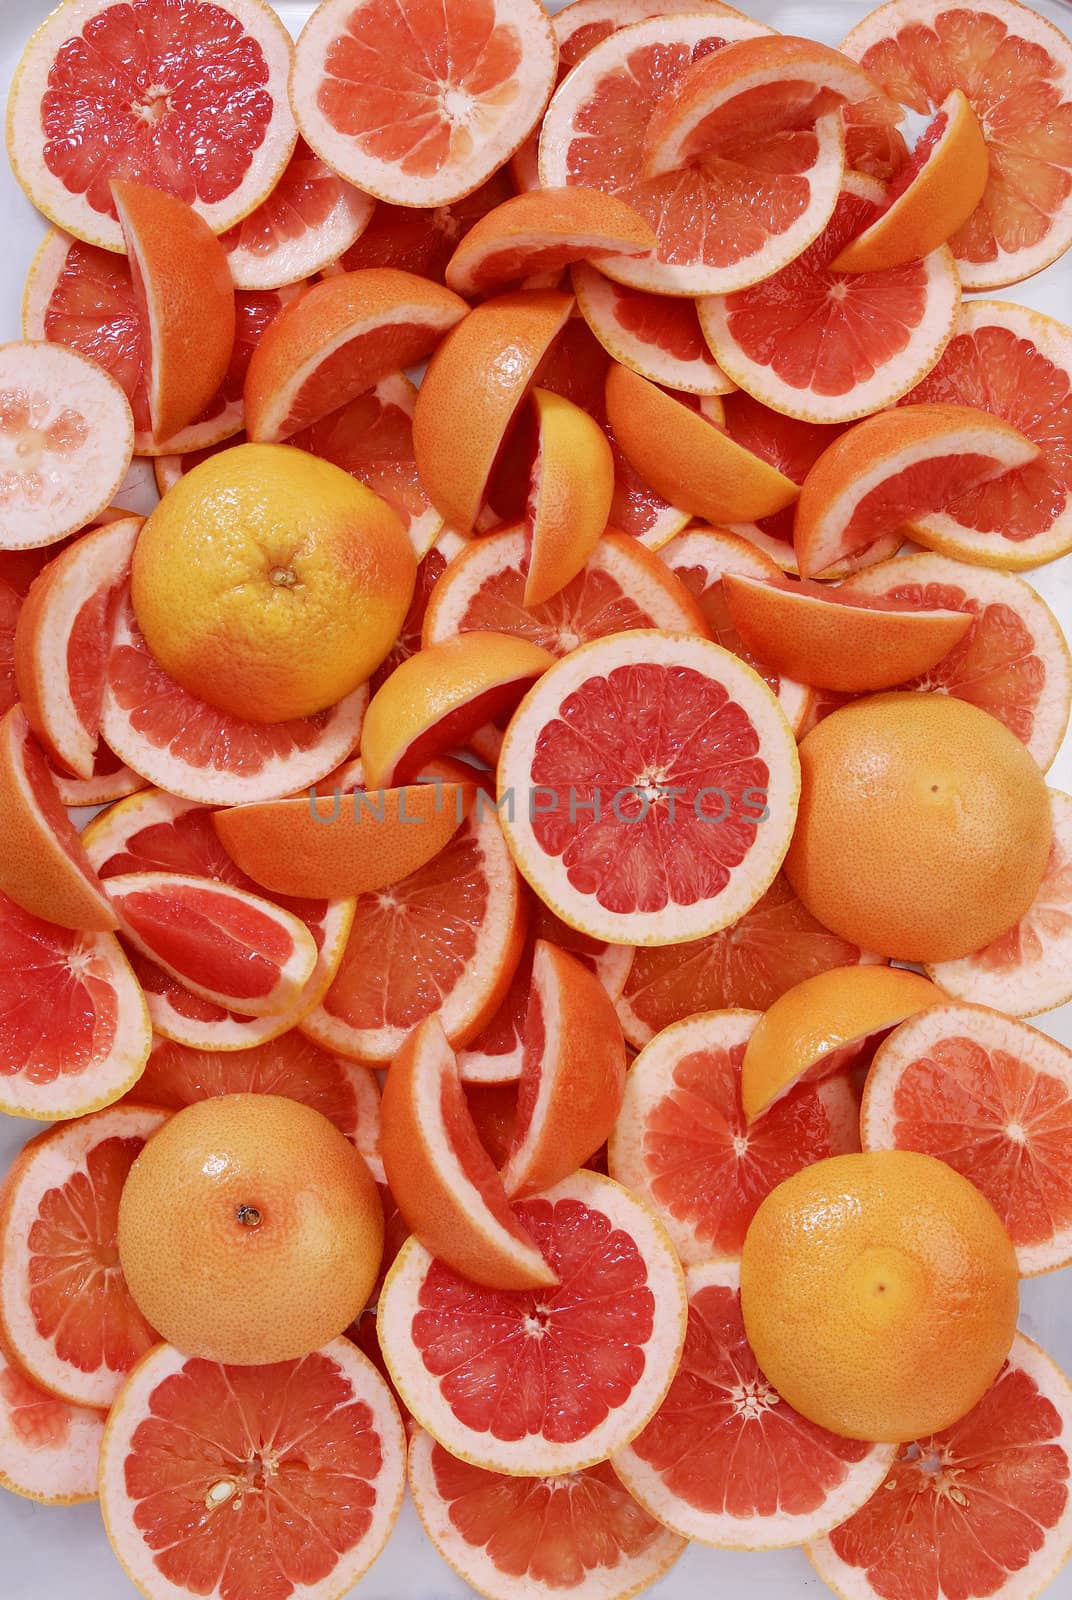 Group of orange for background